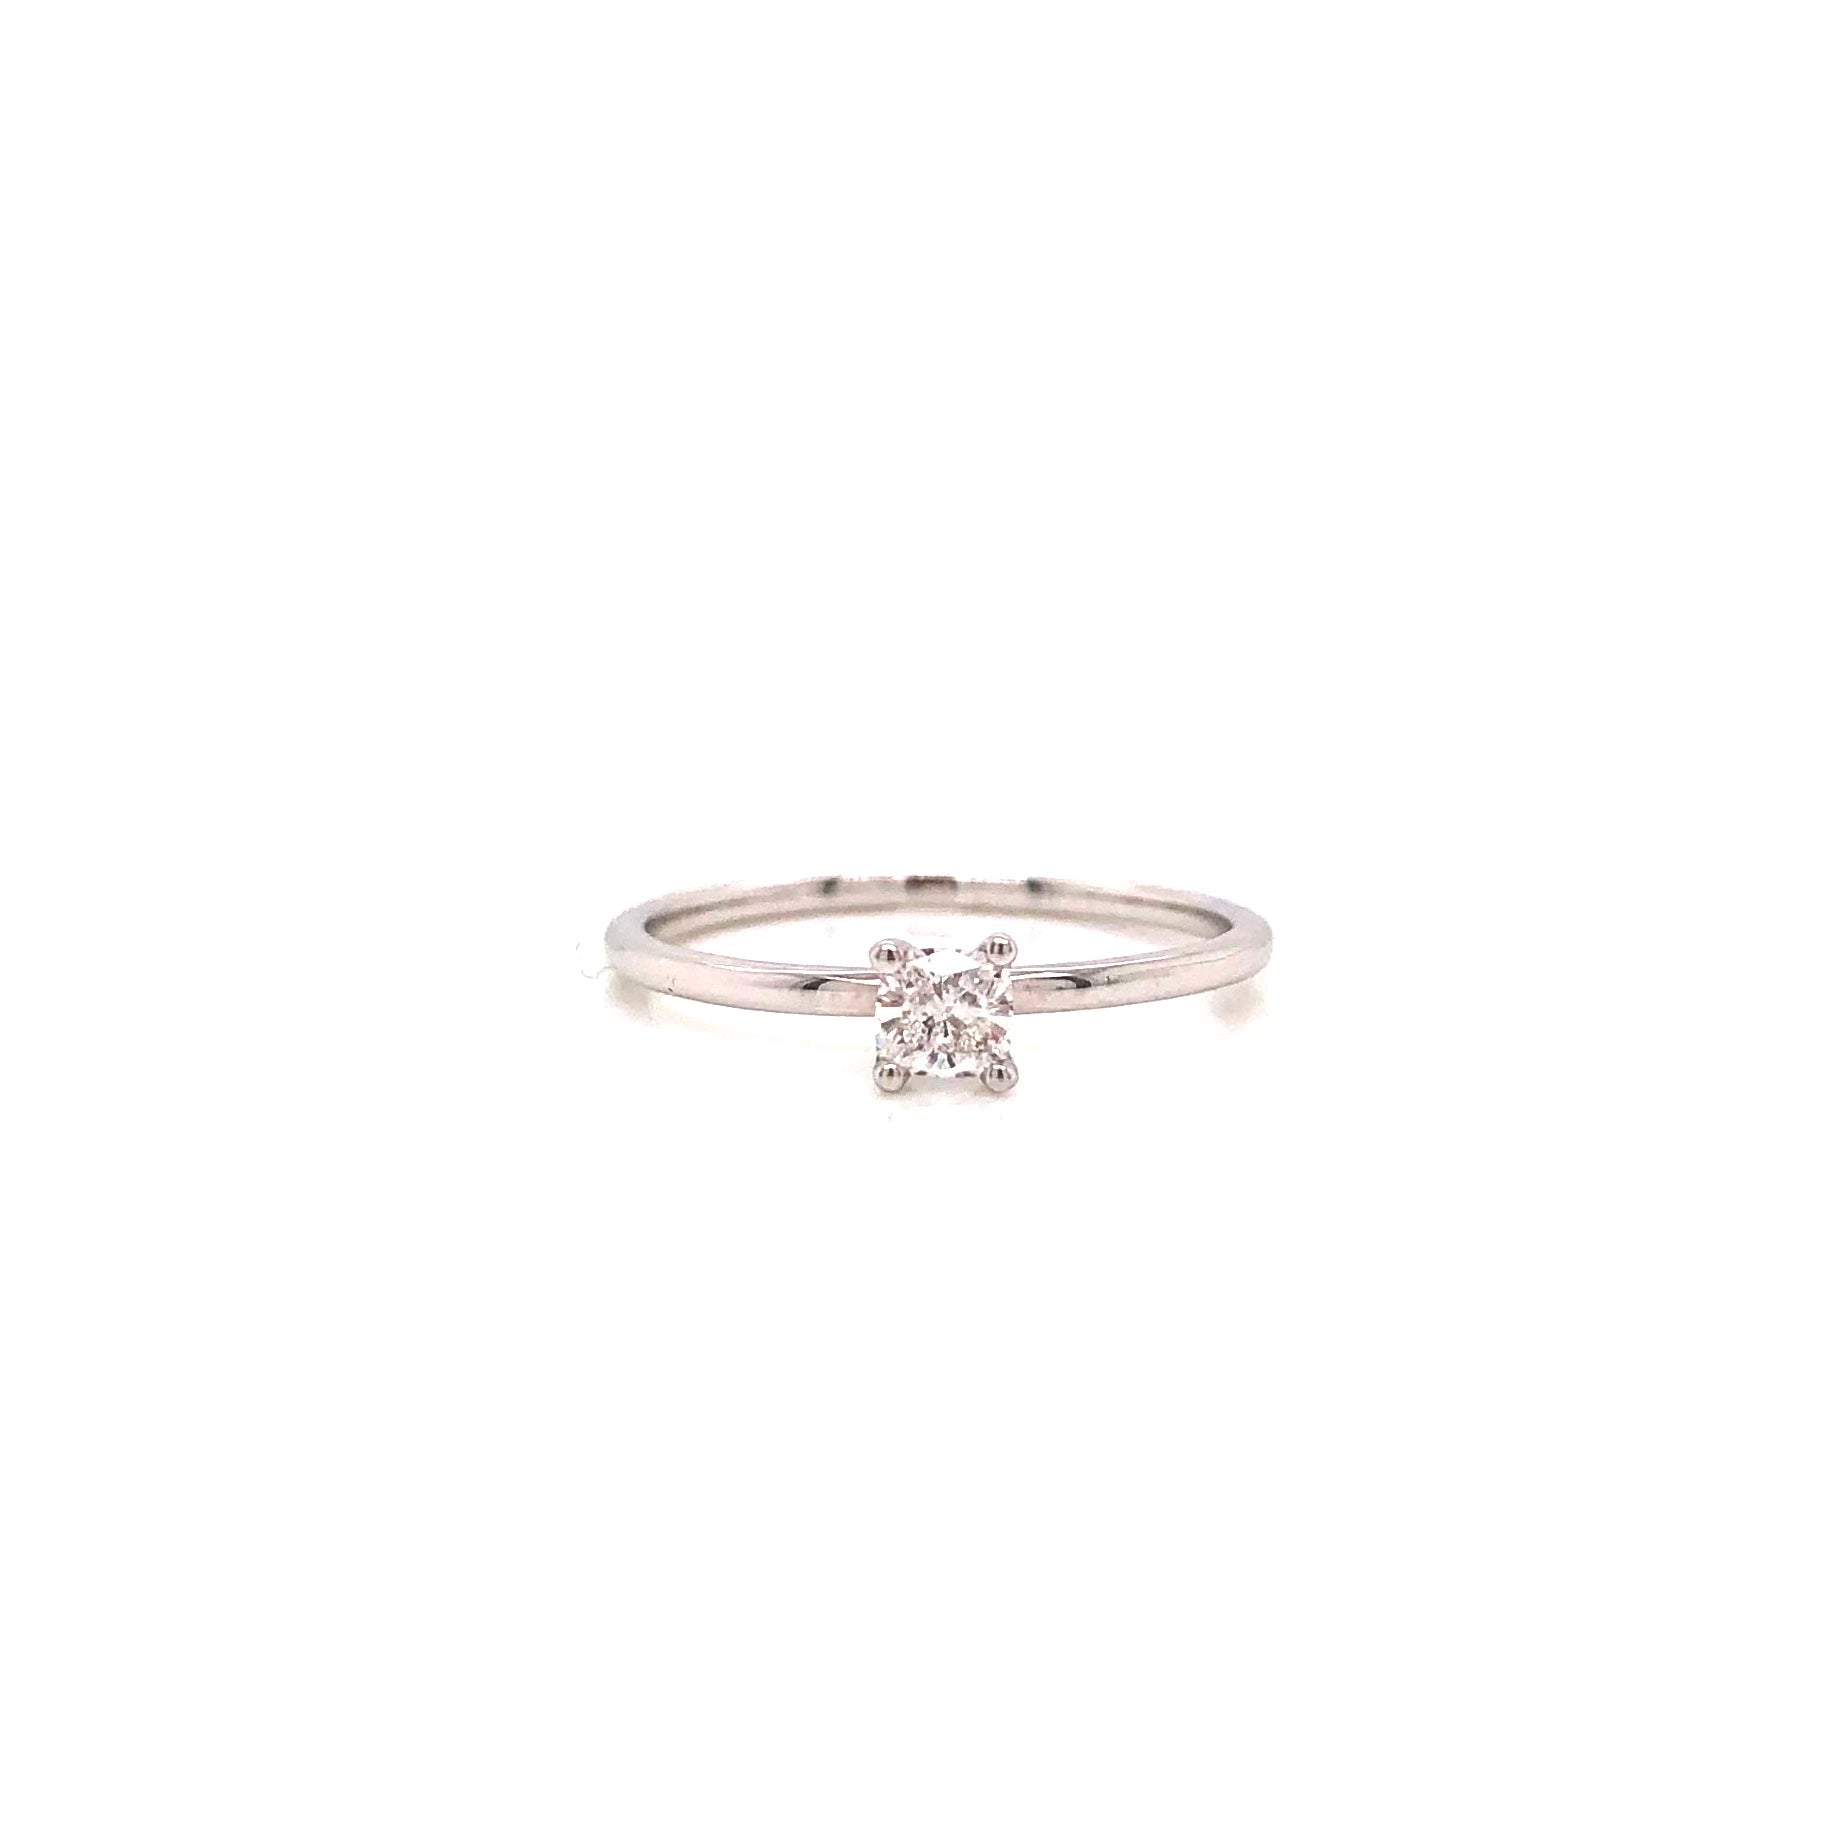 10K White Gold Delicate Cushion Cut Diamond Engagement Ring